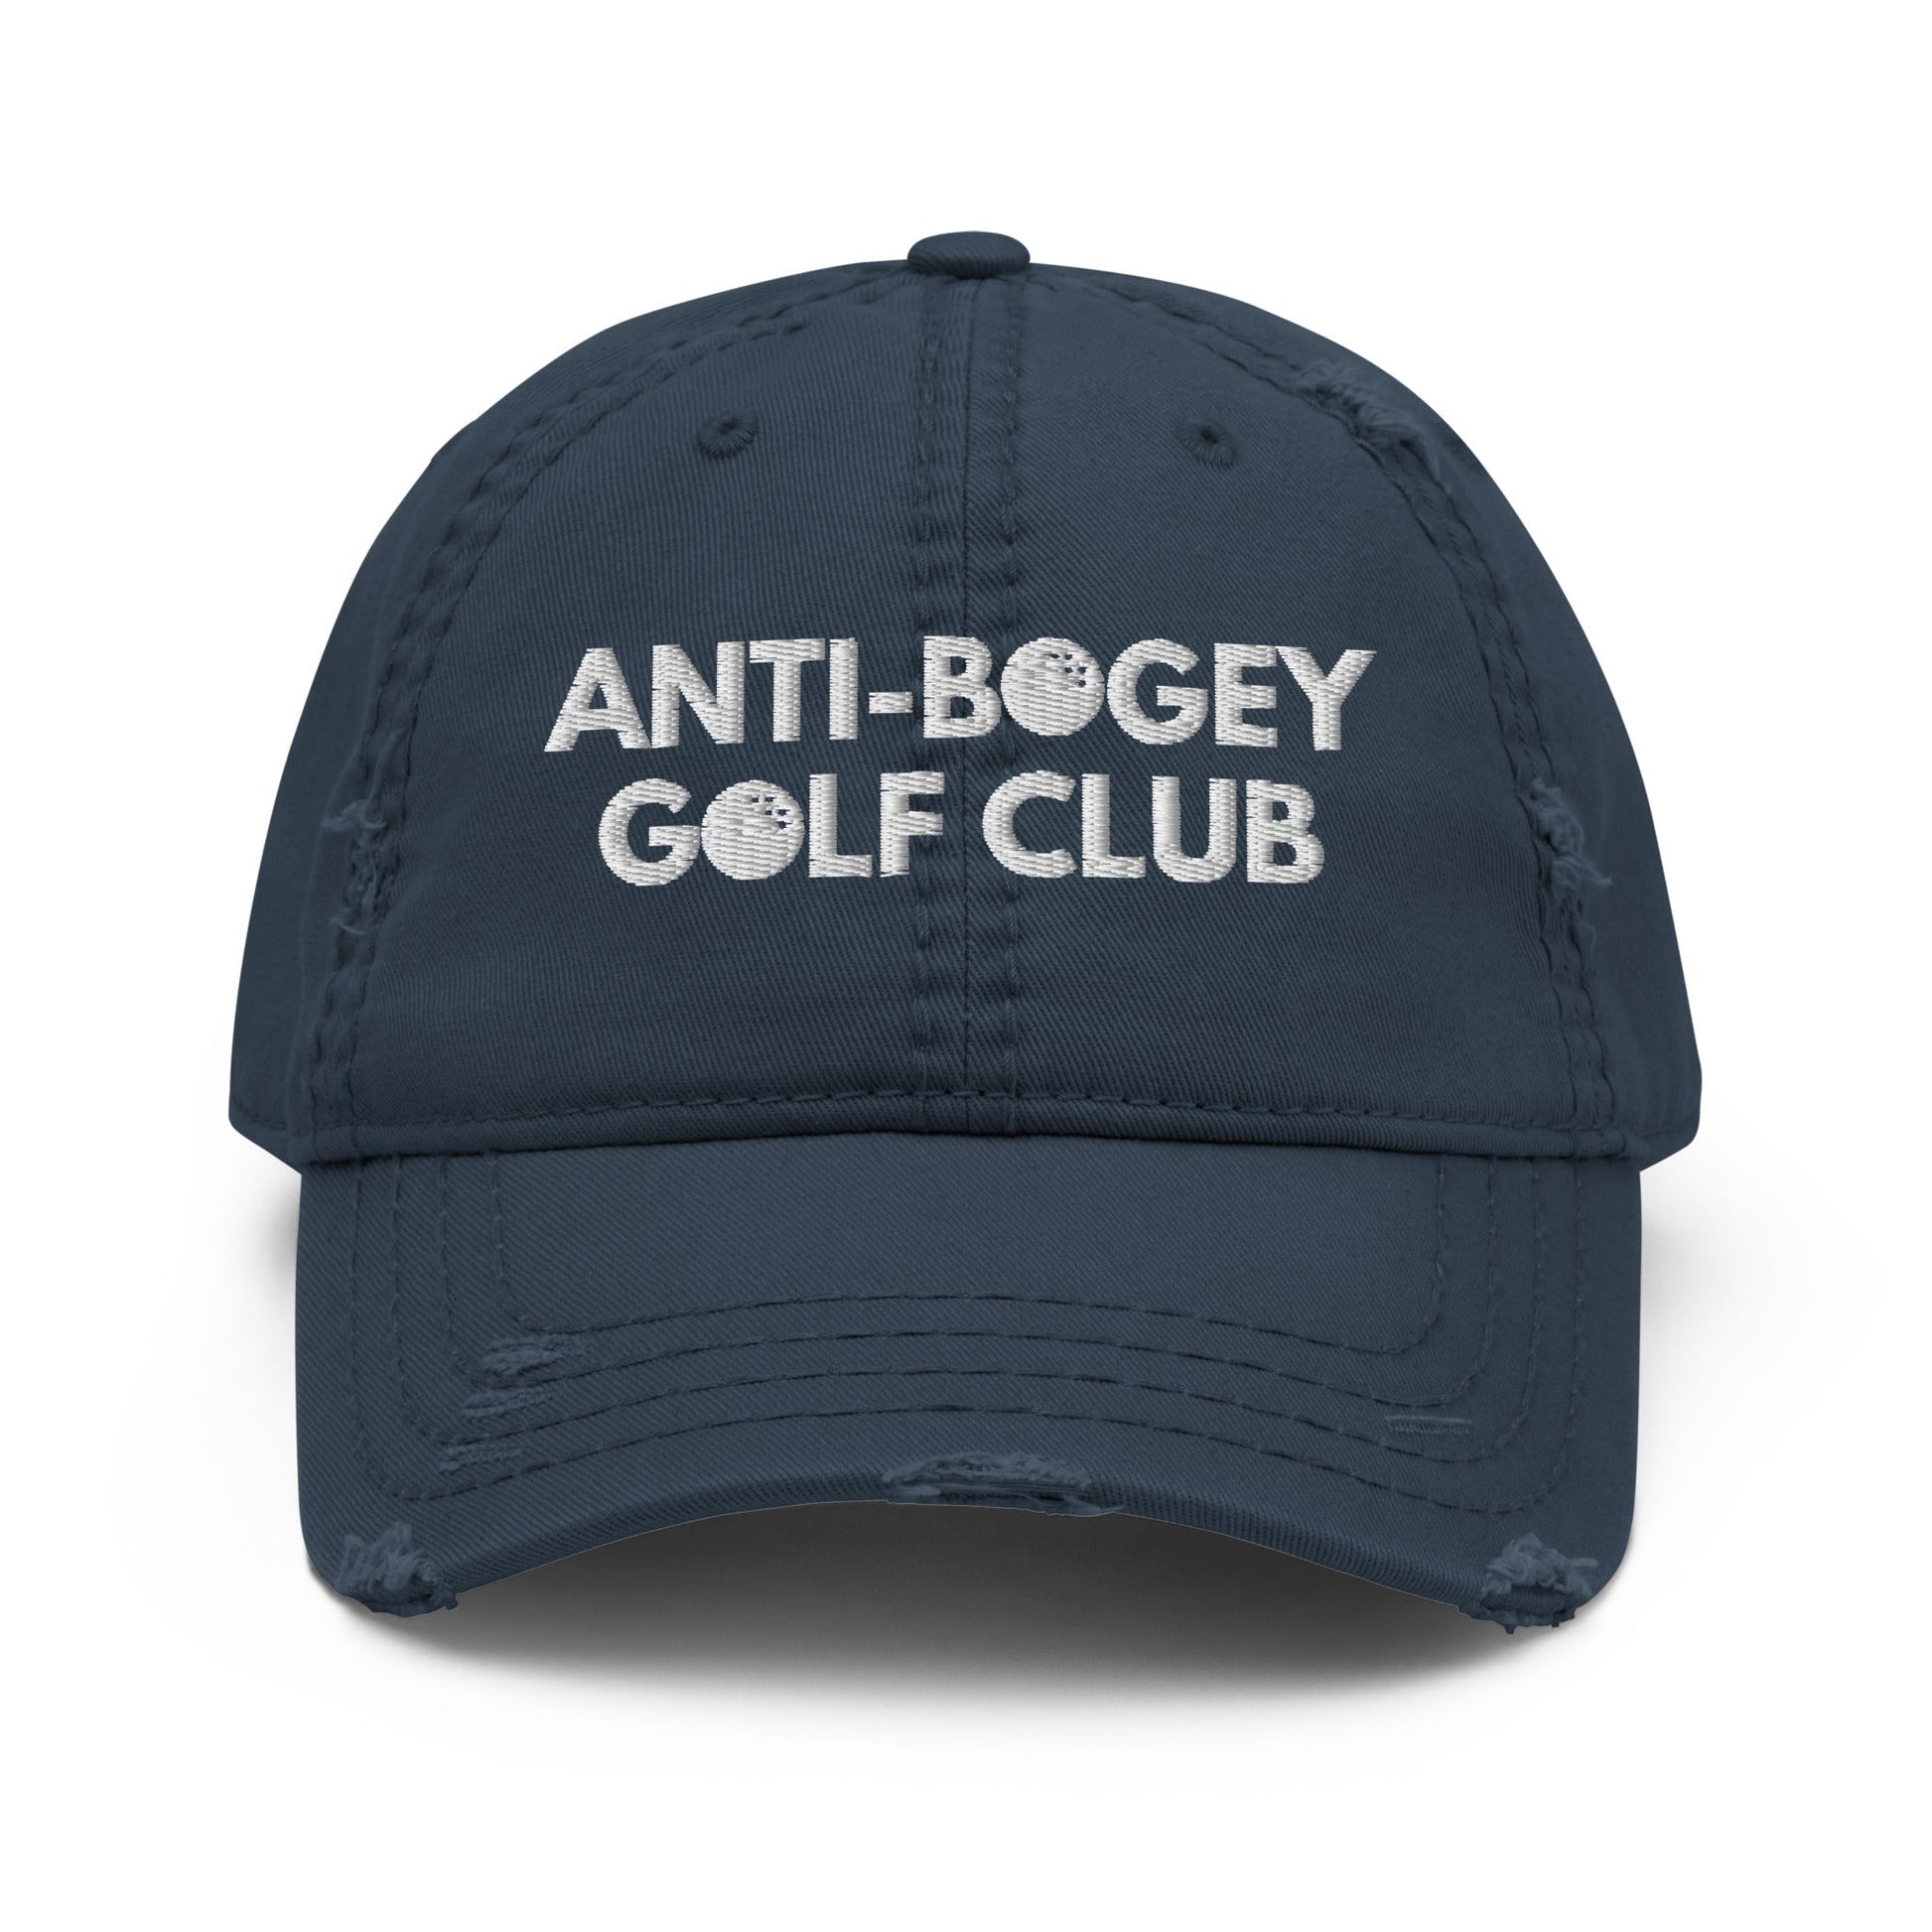 Funny Golfer Gifts  Distressed Cap Navy Anti-Bogey Golf Club Hat Distressed Hat